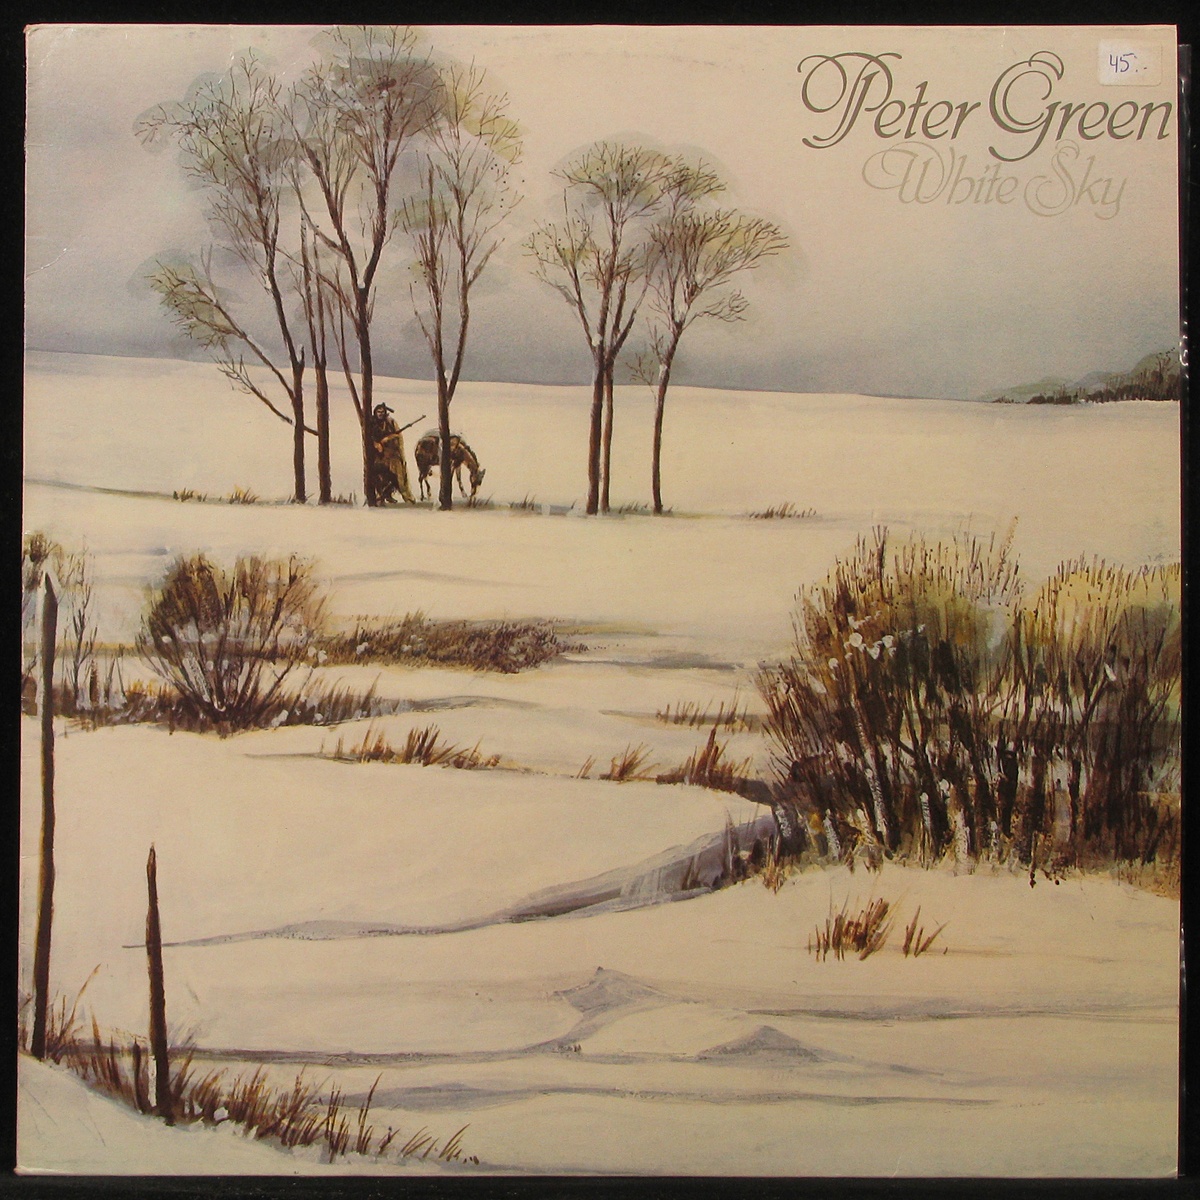 LP Peter Green — White Sky фото